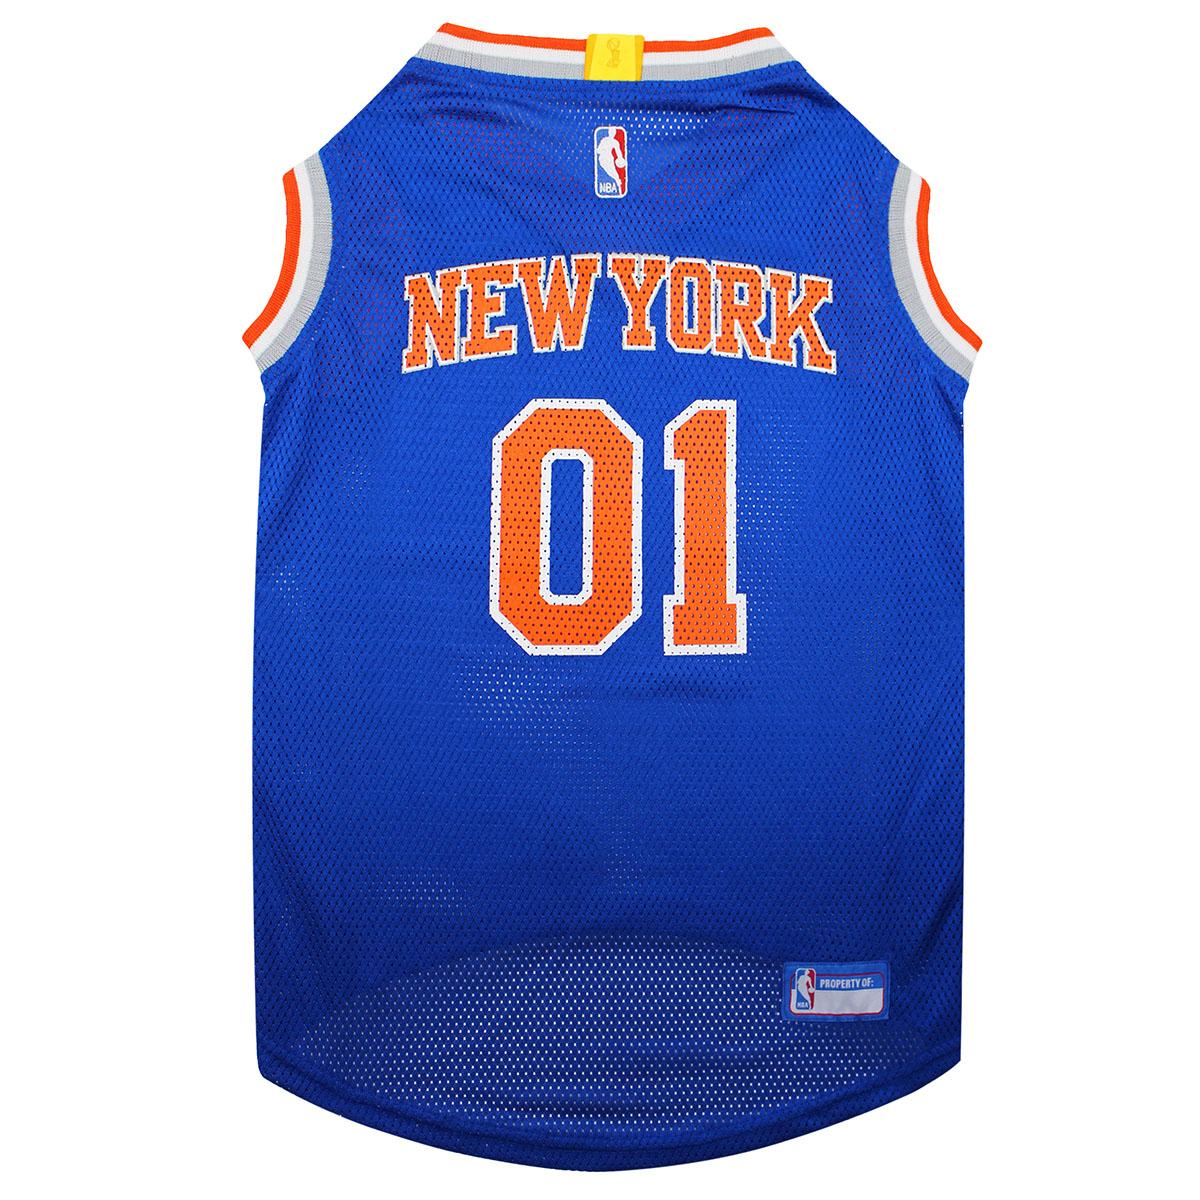 New York Knicks Dog Jersey